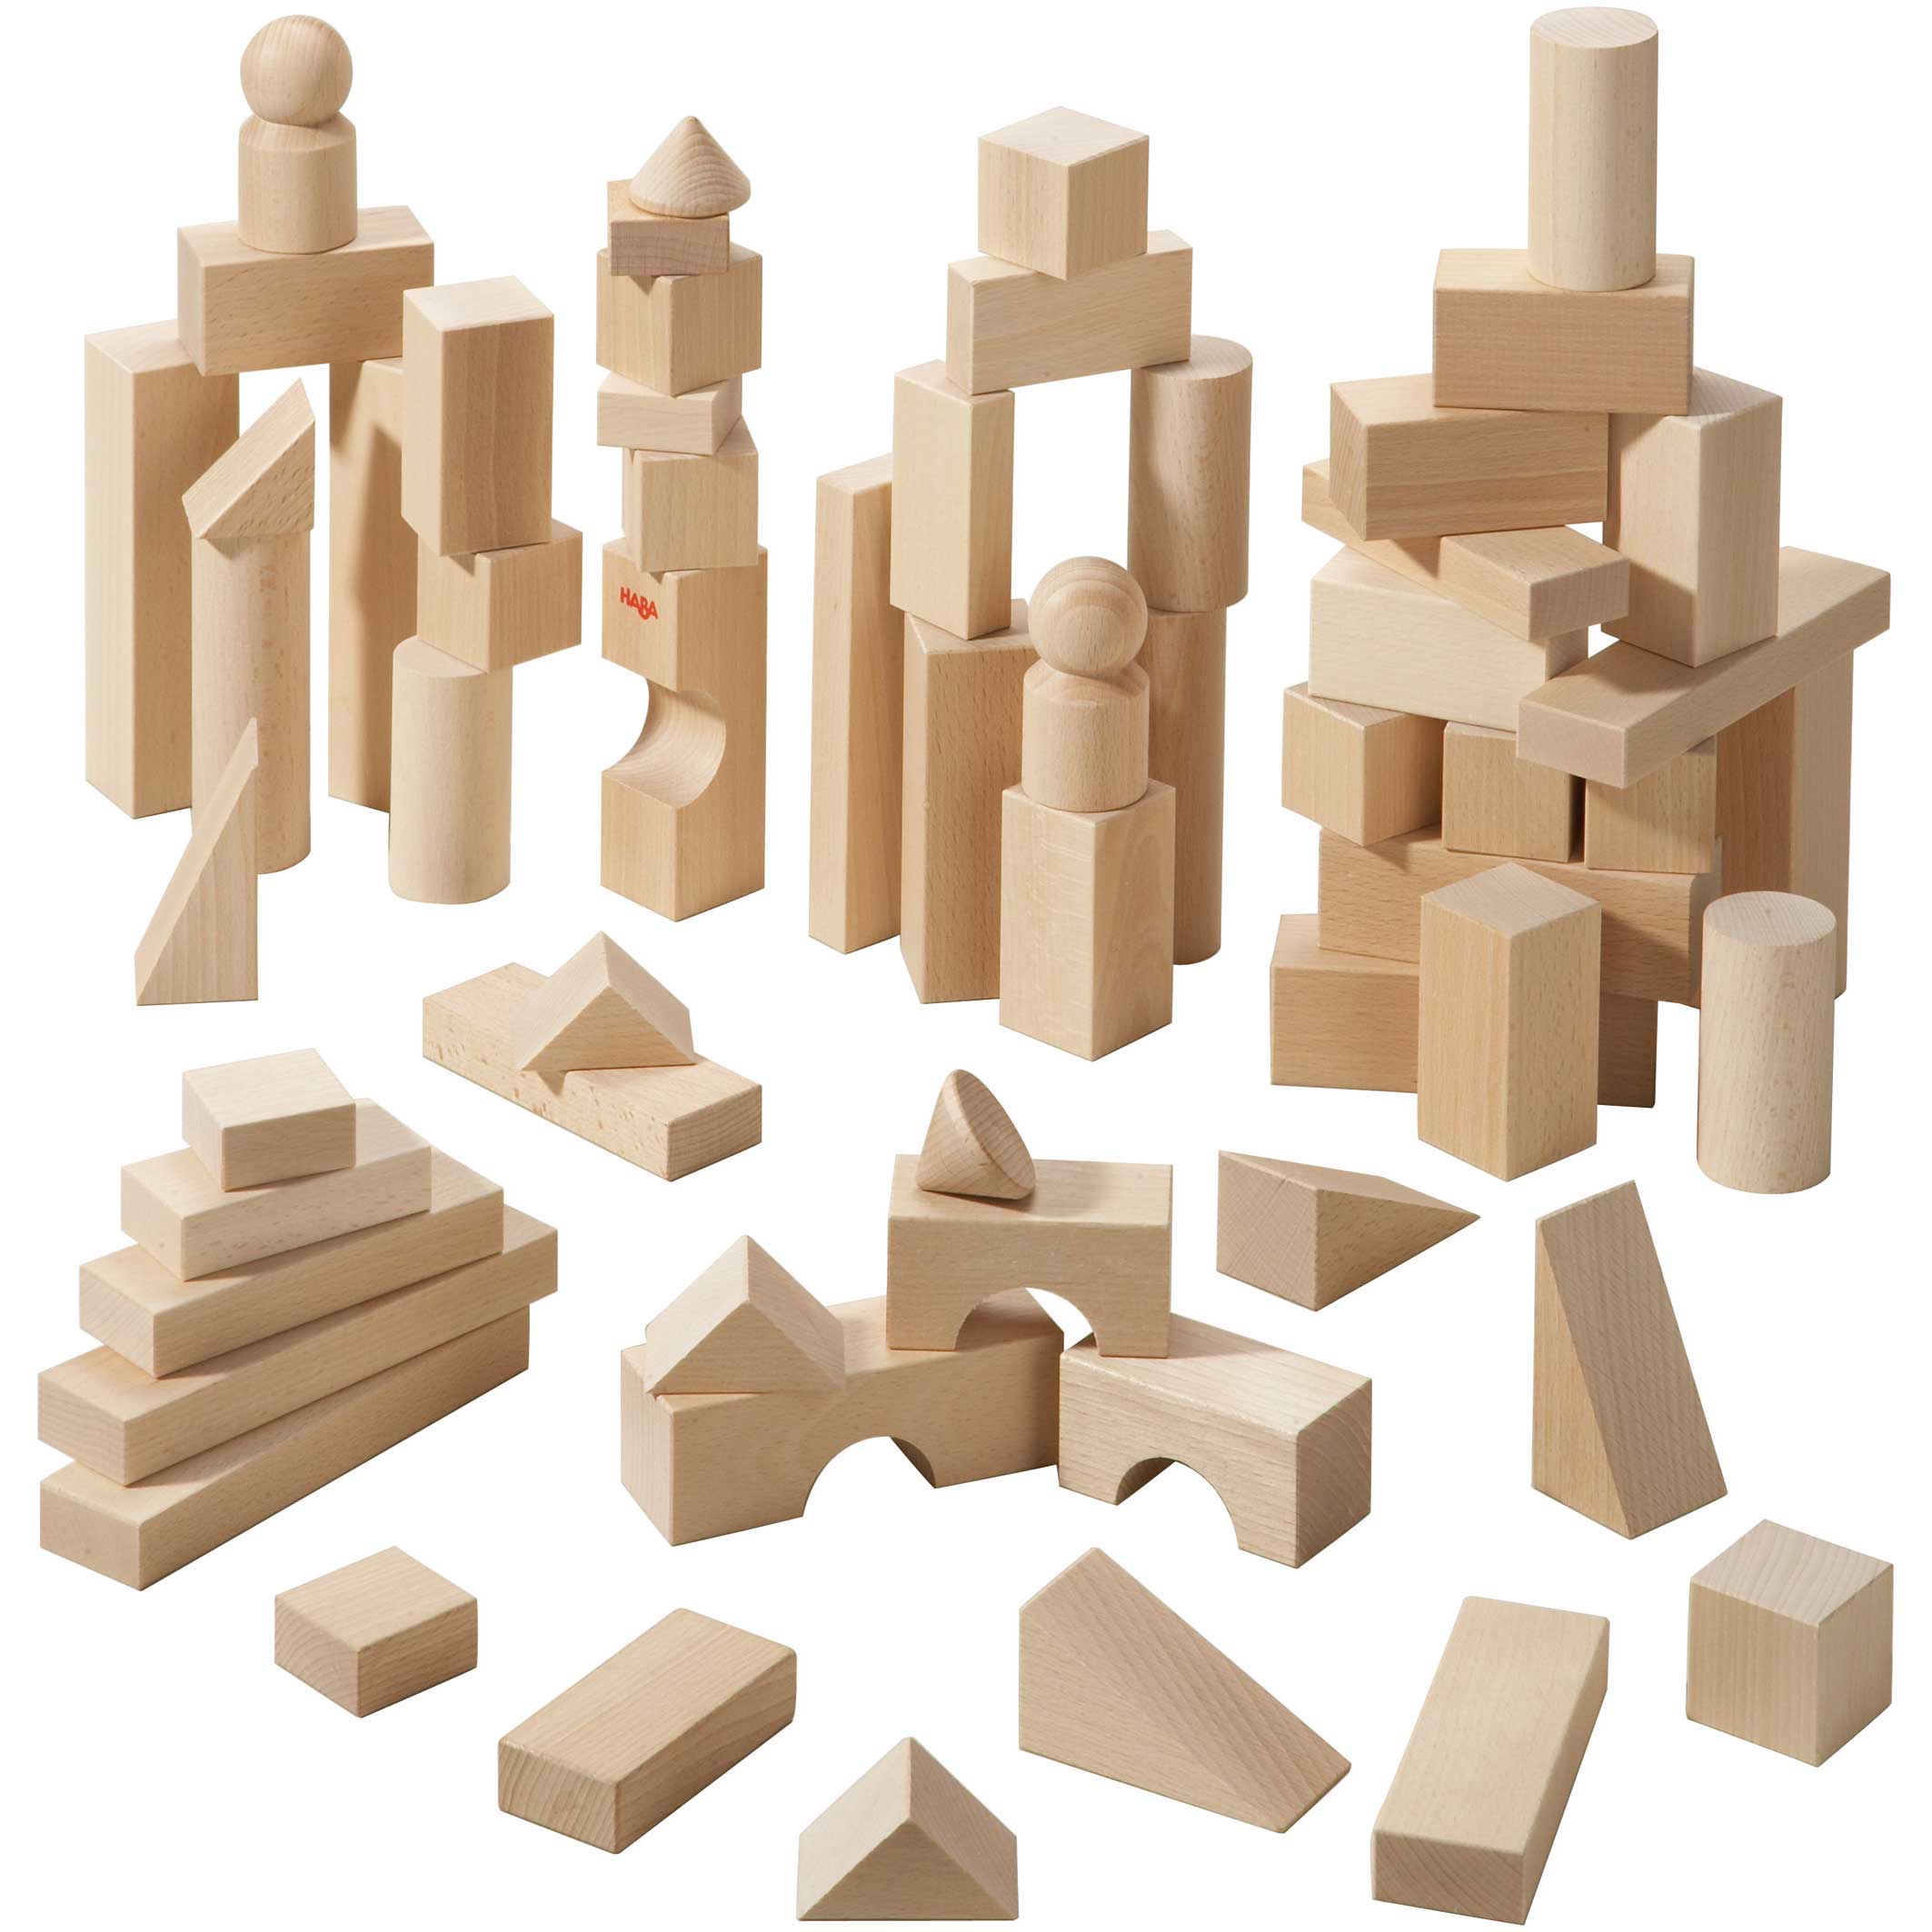 Basic Building Blocks 60 Piece Large Starter Set